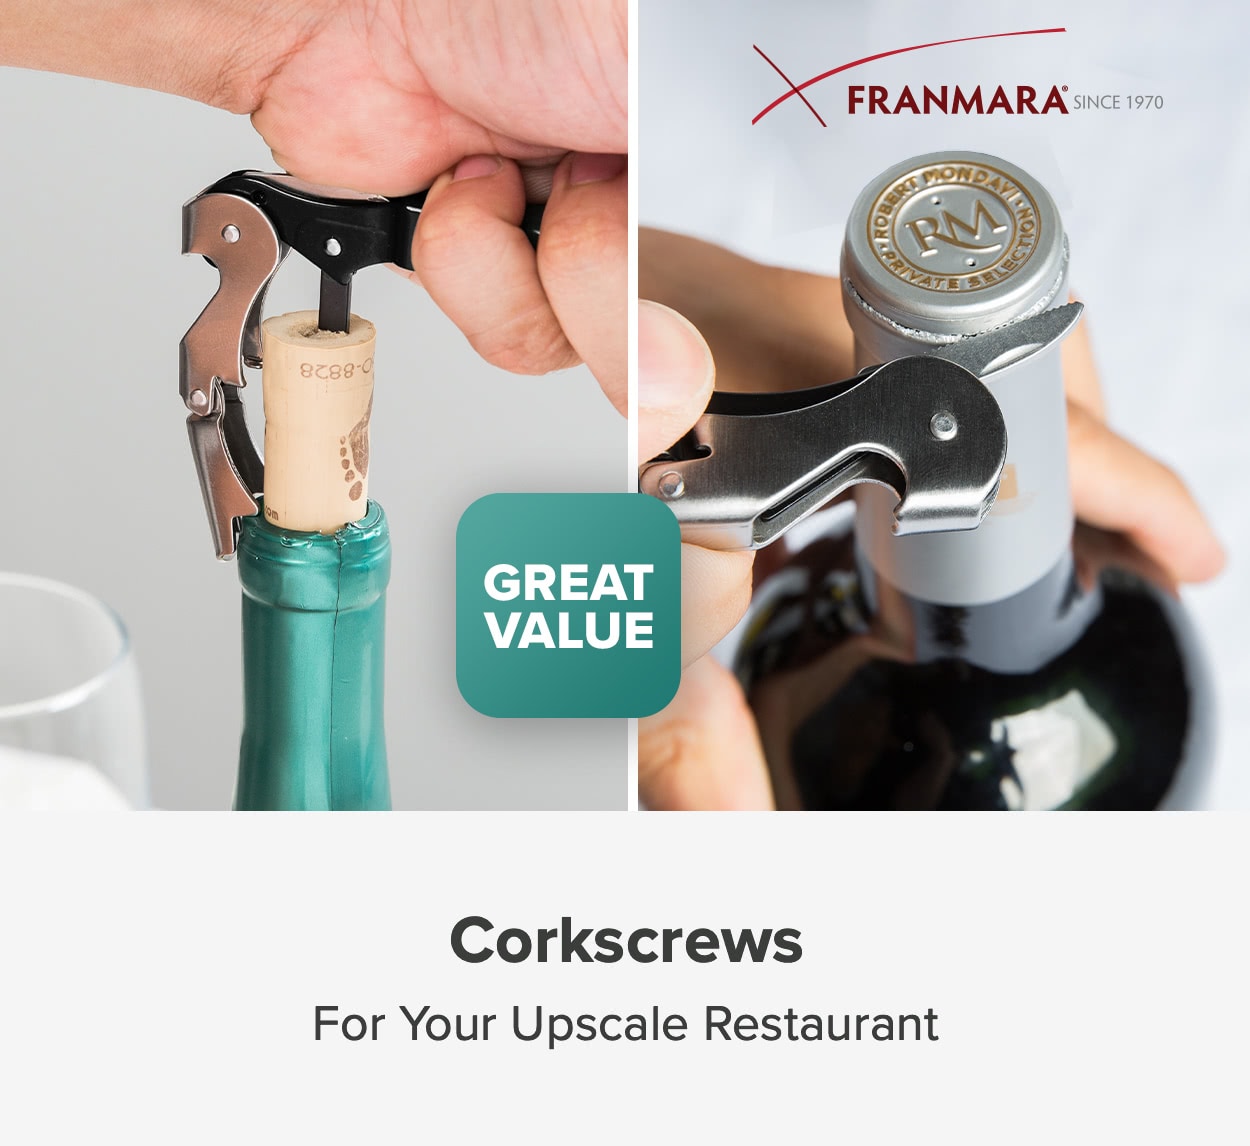 Stock Up on Great Value Franmara Corckscrews for your Upscale Restaurant